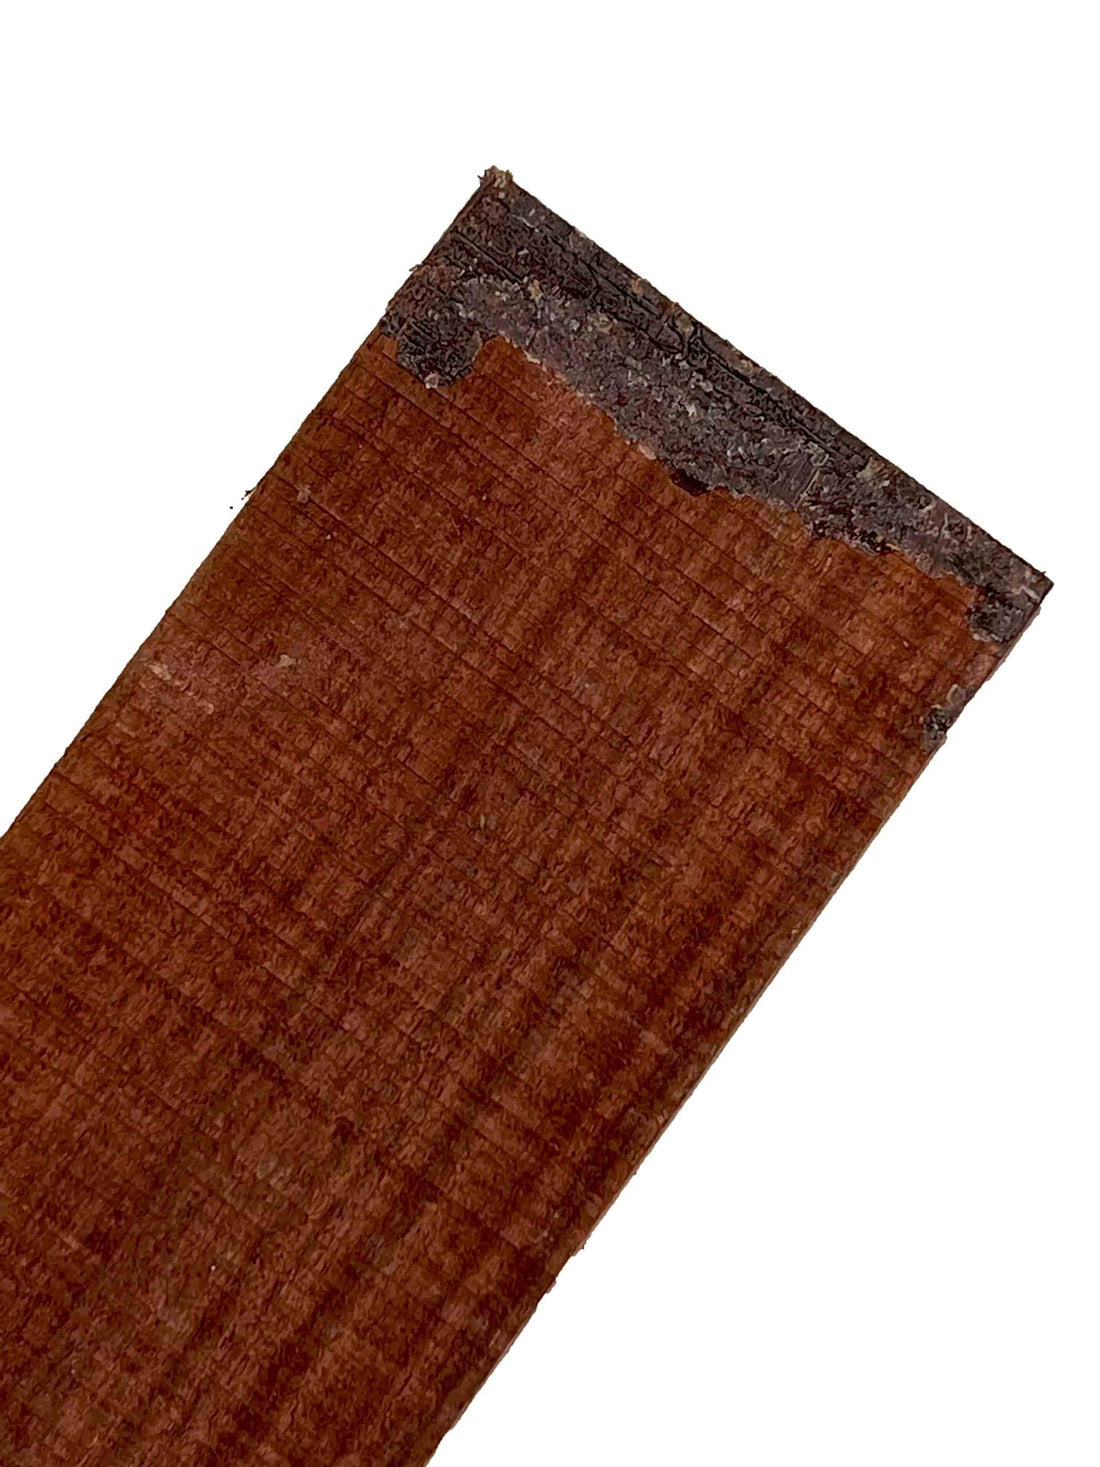 East Indian Rosewood Guitar Fingerboard Blank - Exotic Wood Zone - Buy online Across USA 